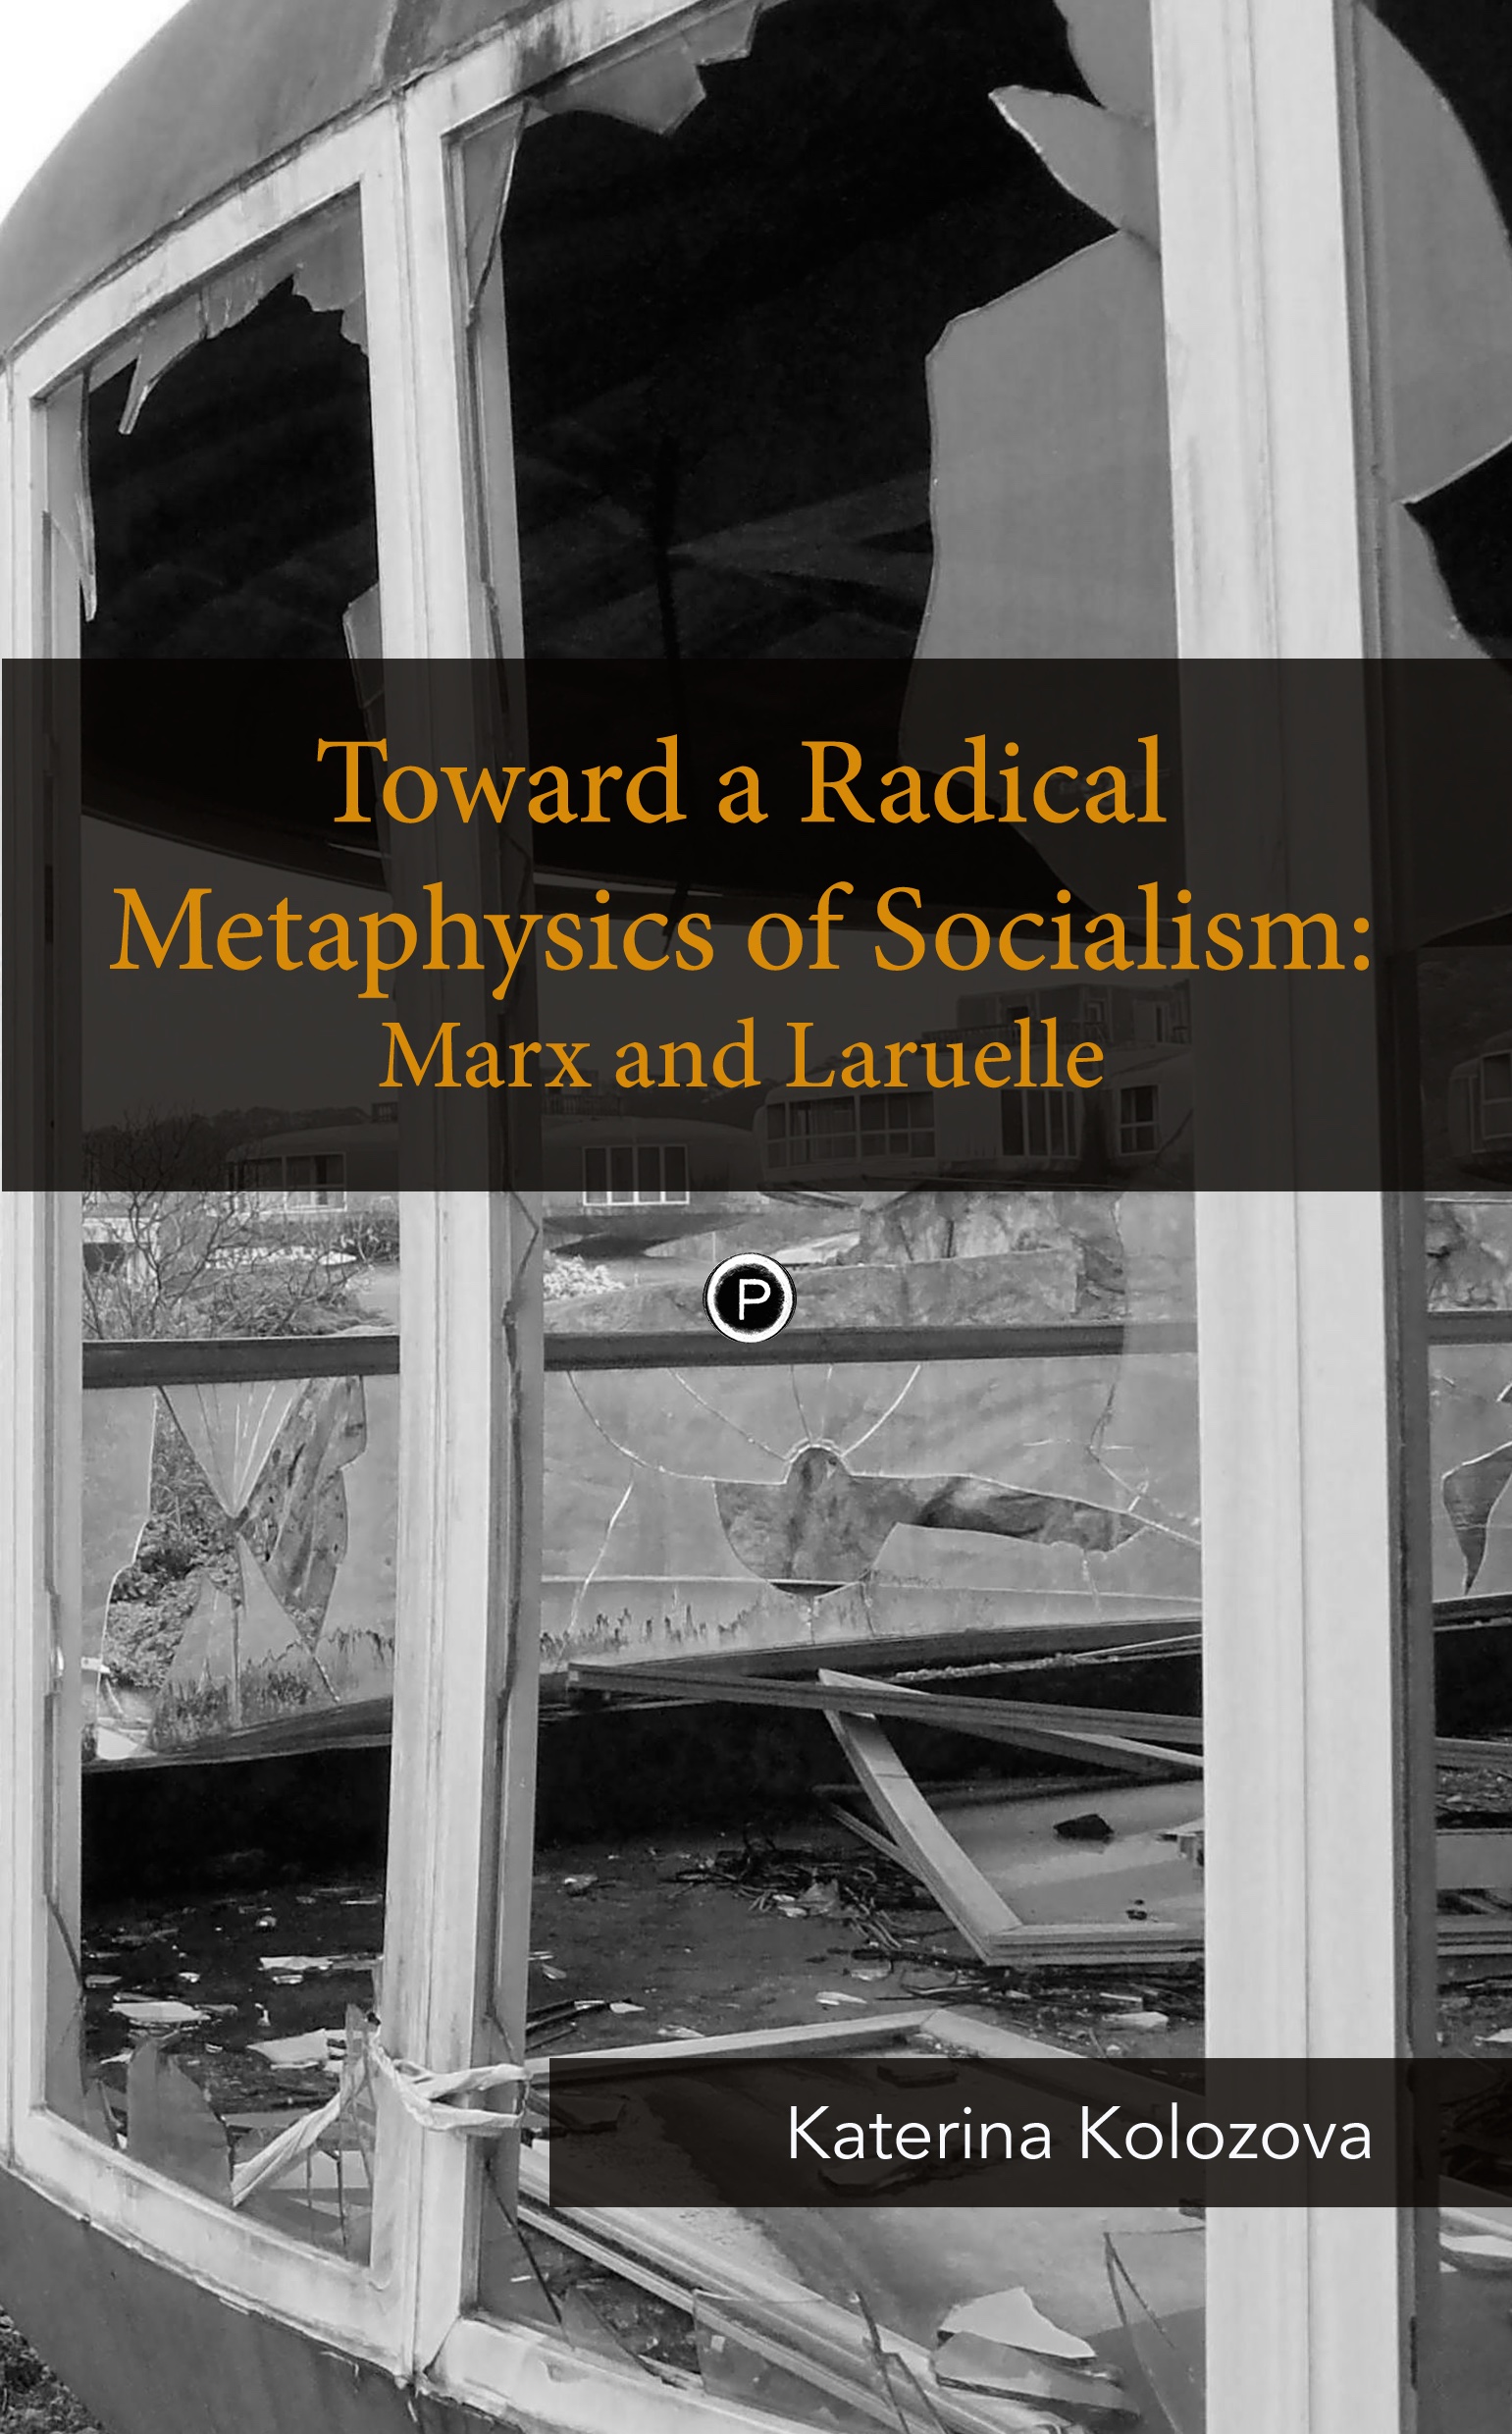 Toward a Radical Metaphysics of Socialism: Marx and Laruelle (punctum books, 2015)